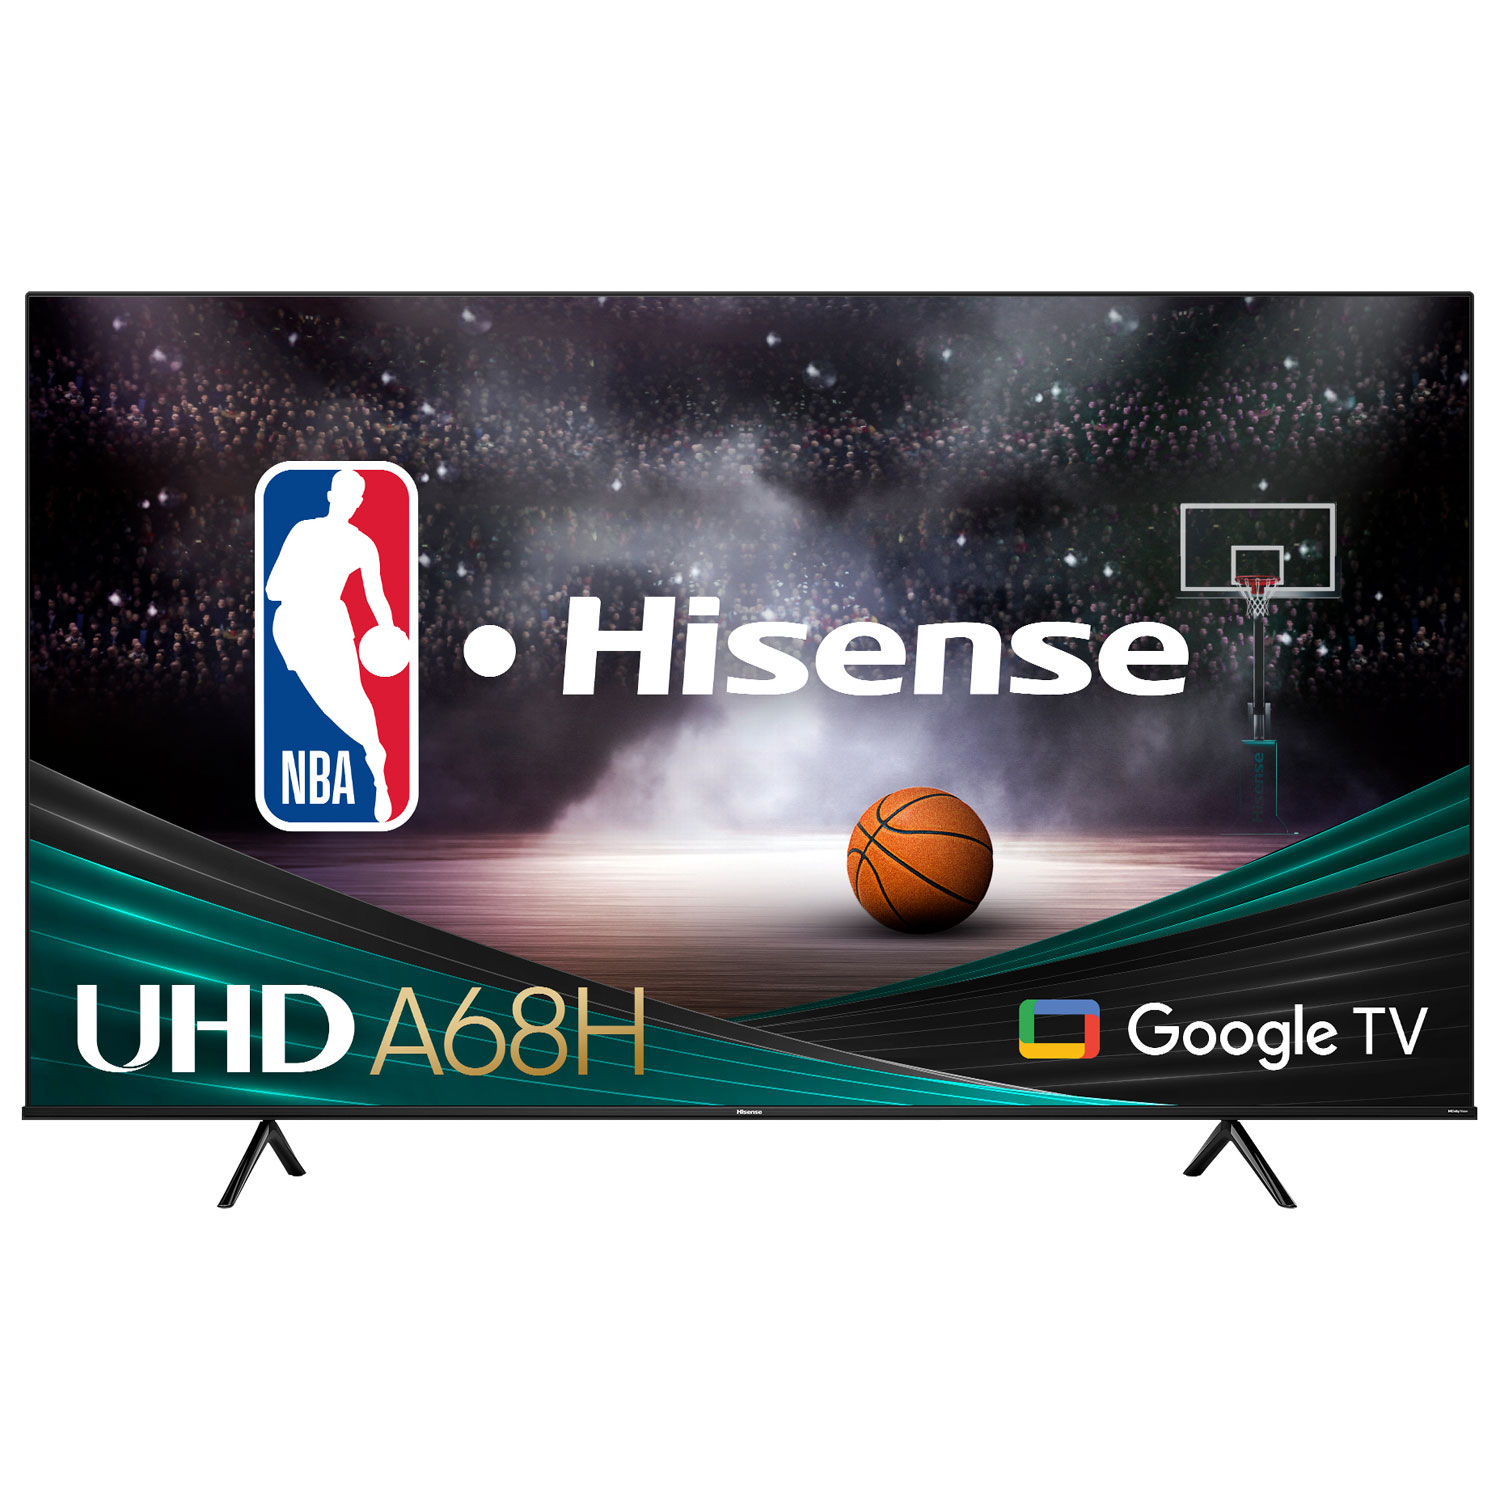 Hisense A68H 75" 4K UHD HDR LCD Smart Google TV (75A68H) - 2022